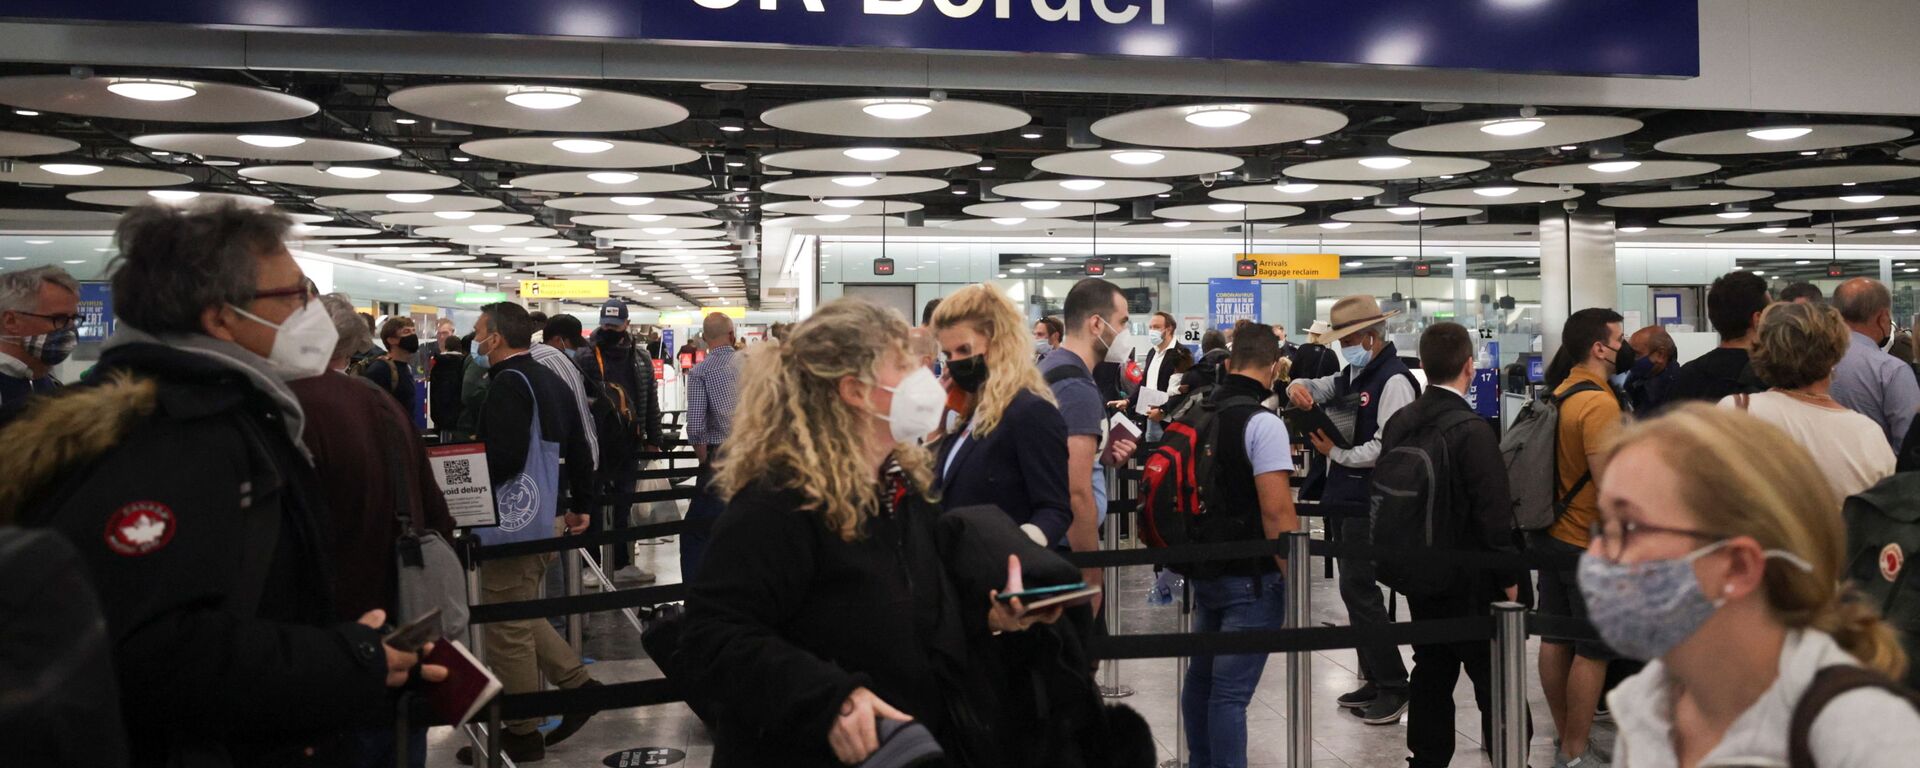 Arriving passengers queue at UK Border Control at the Terminal 5 at Heathrow Airport in London - Sputnik International, 1920, 08.07.2021